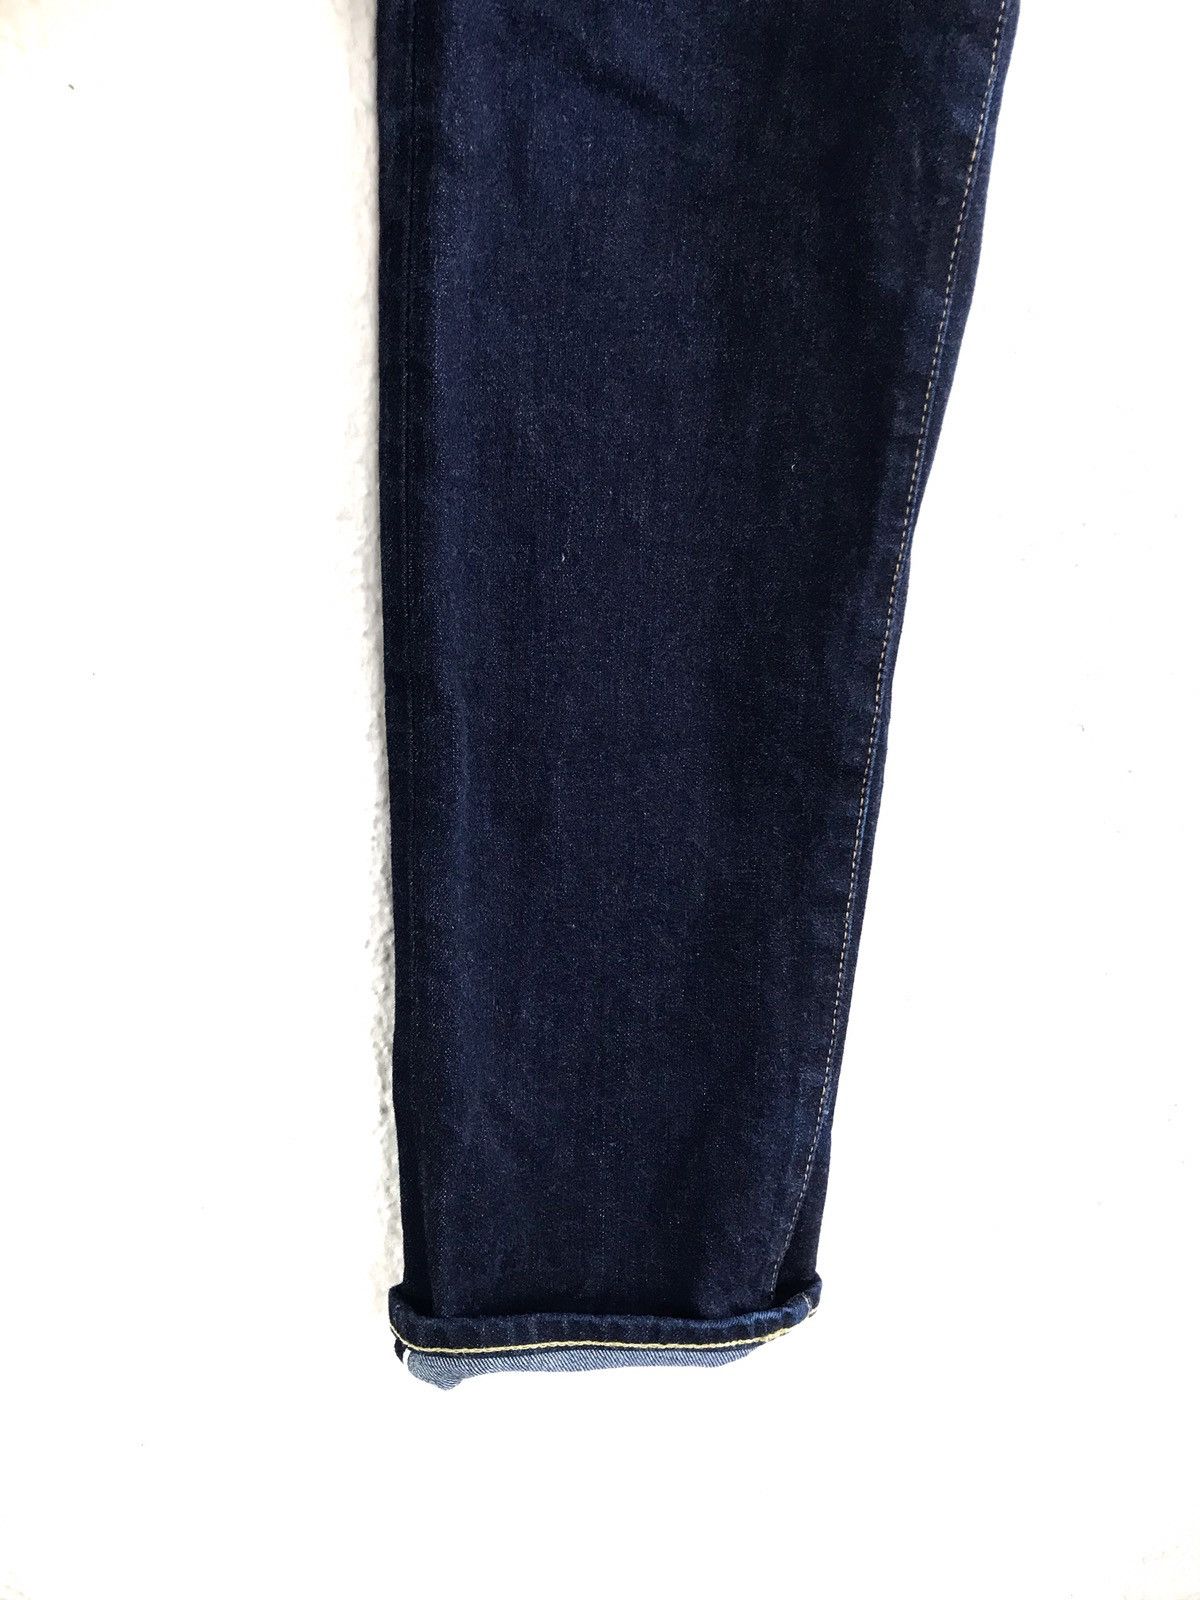 VANQUISH Japan Selvedge Skinny Jeans - 11